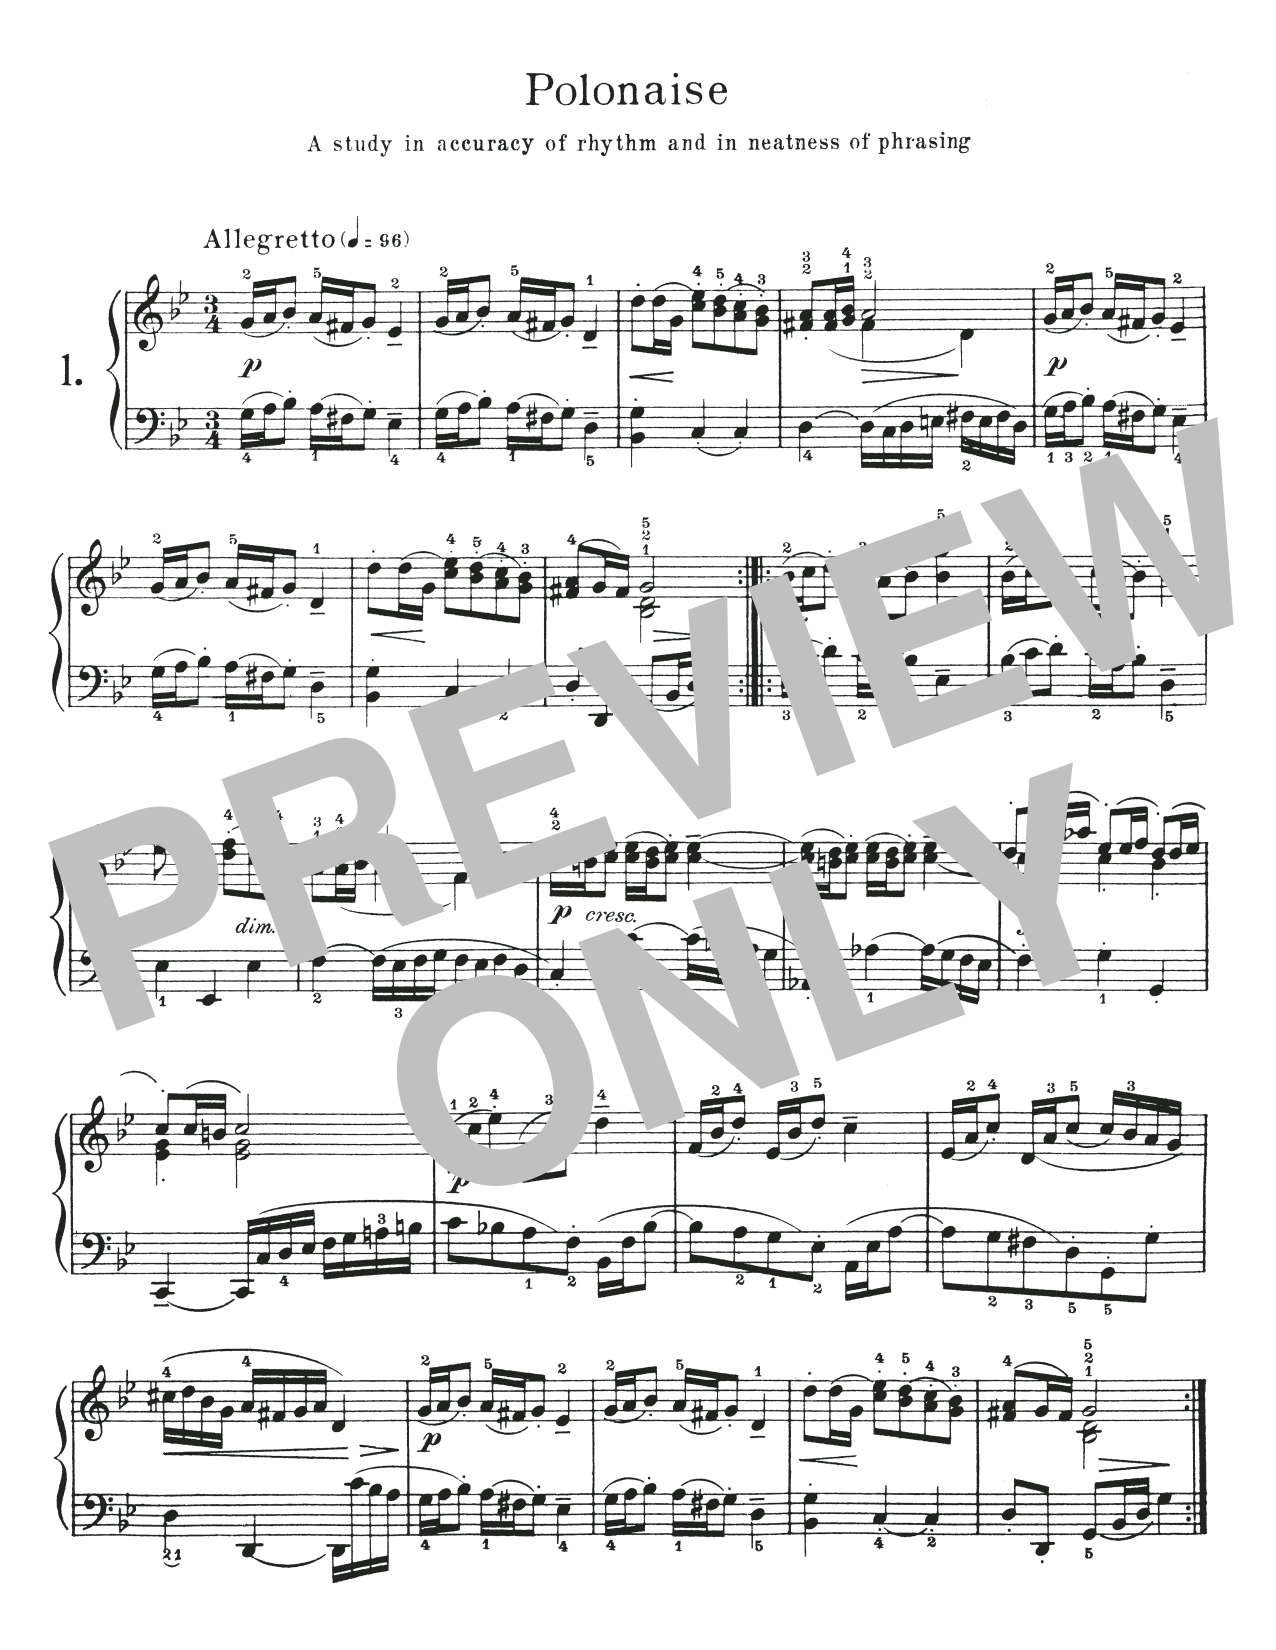 Johann Sebastian Bach Polonaise In G Minor, BWV Appendix 125 Sheet Music Notes & Chords for Piano Solo - Download or Print PDF